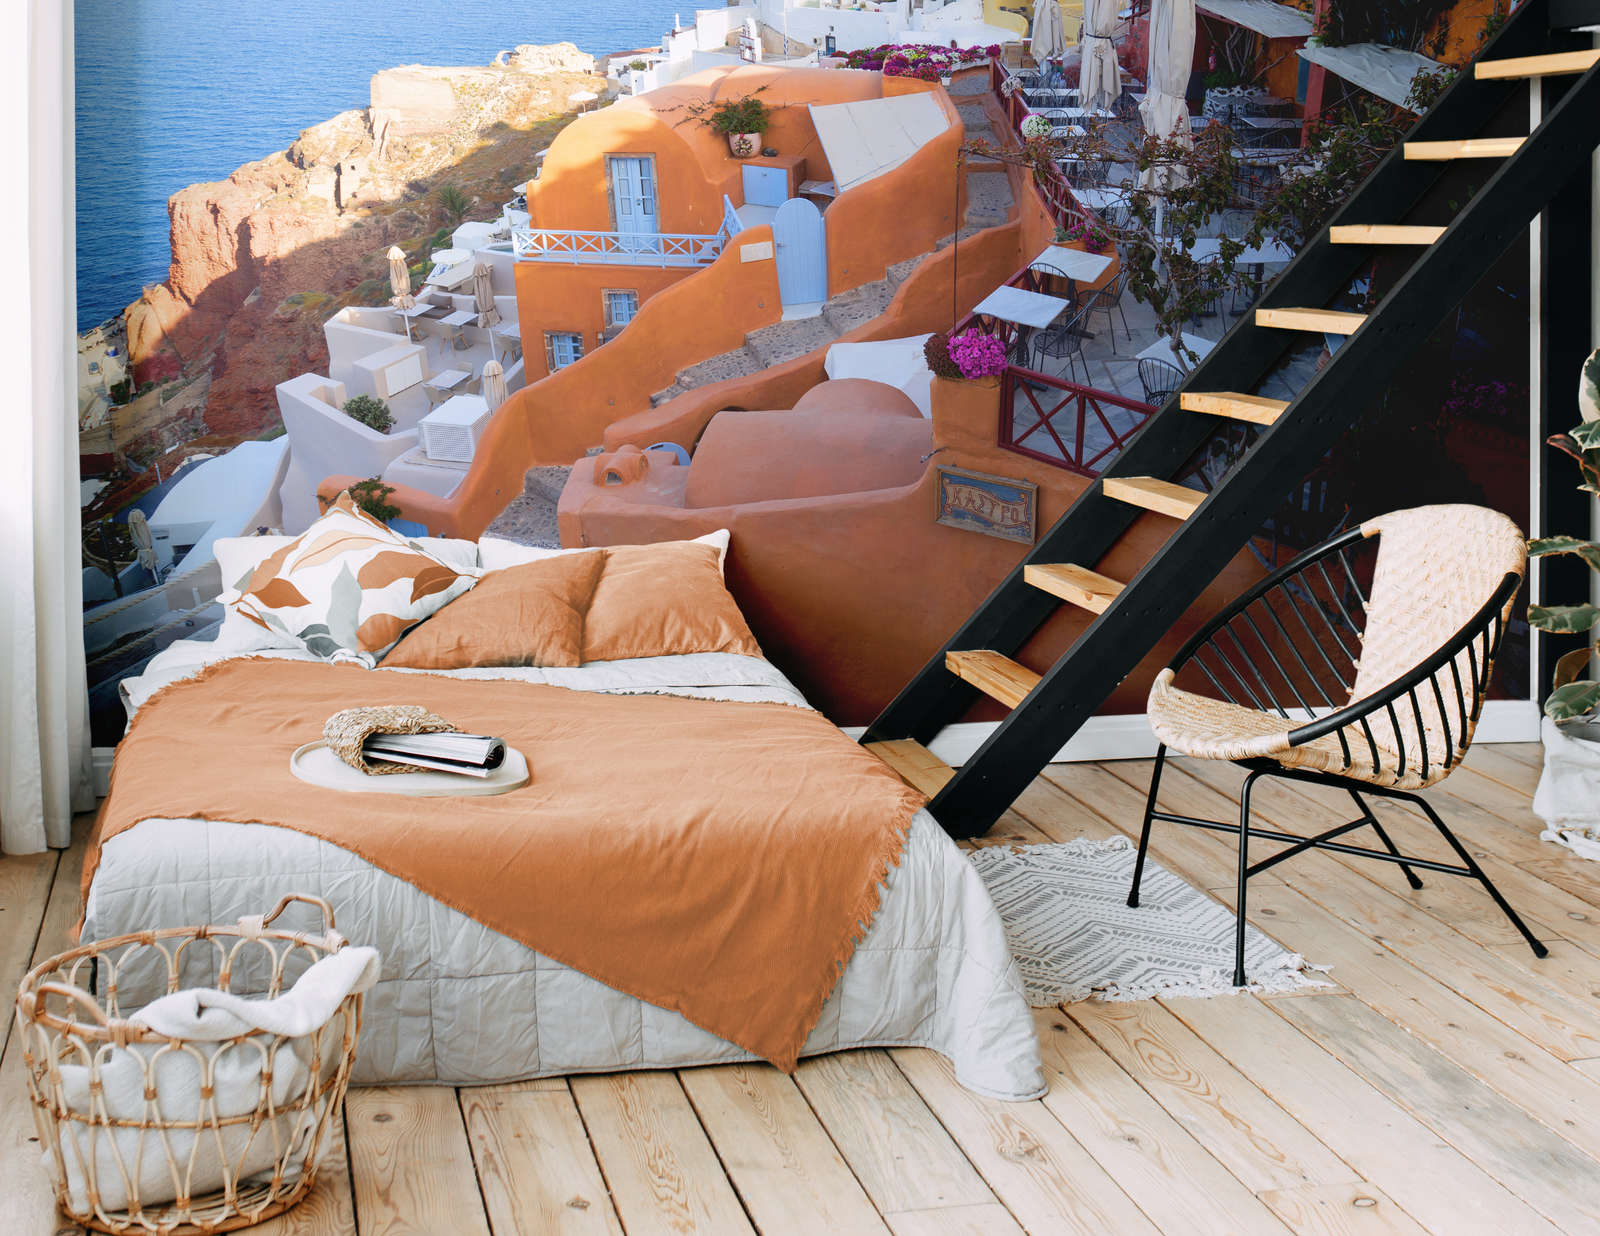             Terrace on the coast of Santorini mural - non-woven structure
        